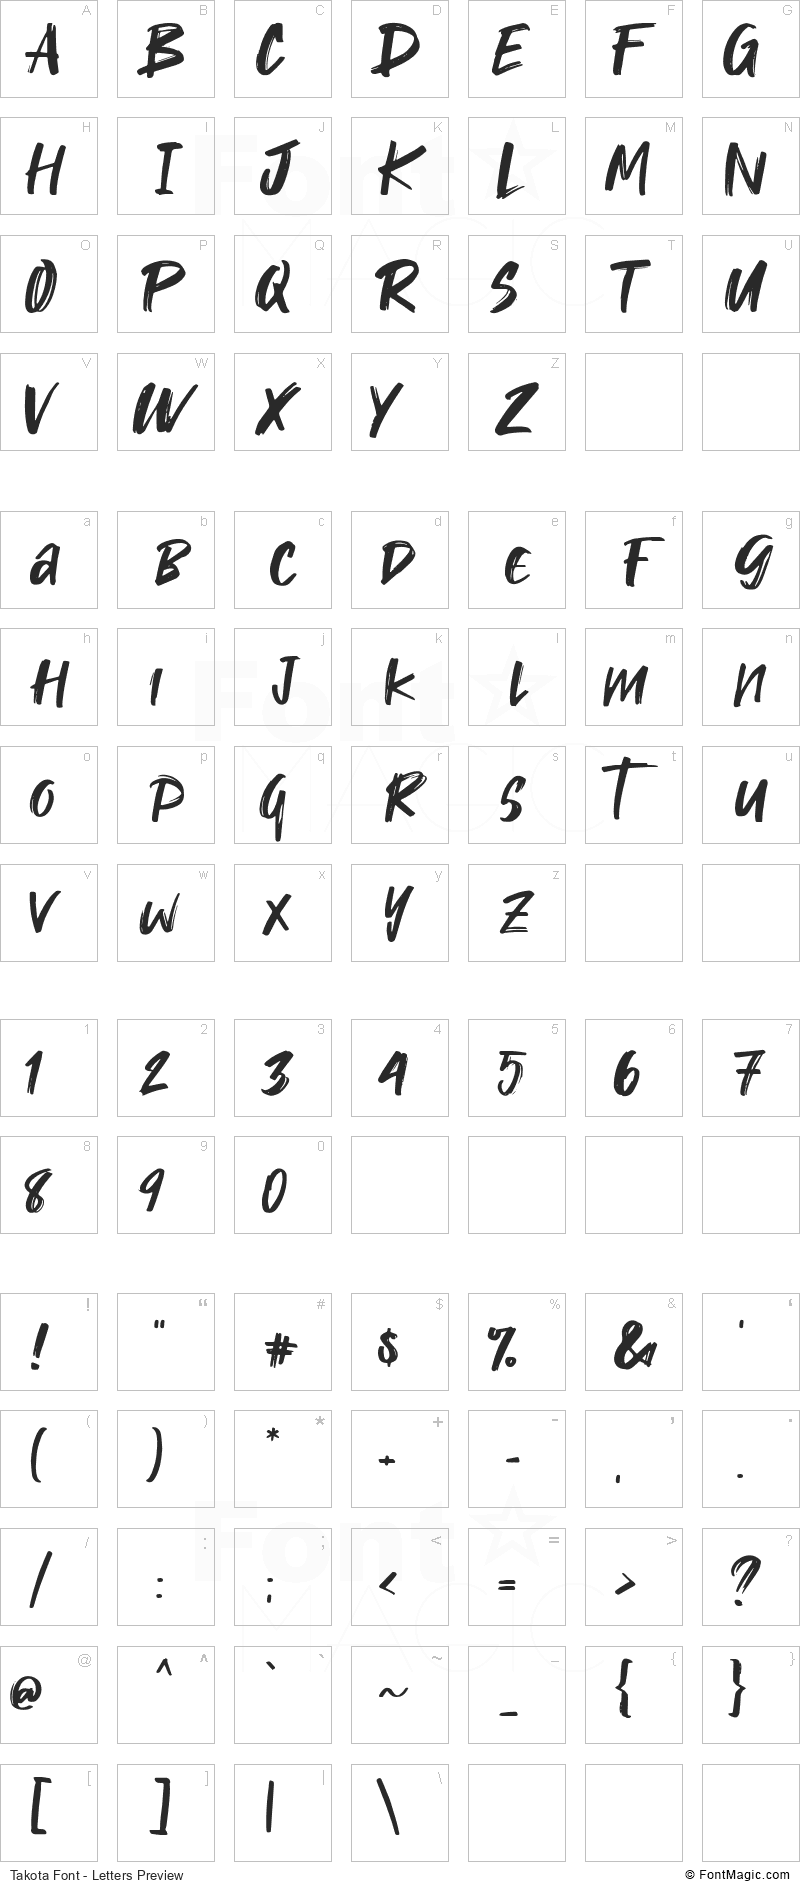 Takota Font - All Latters Preview Chart